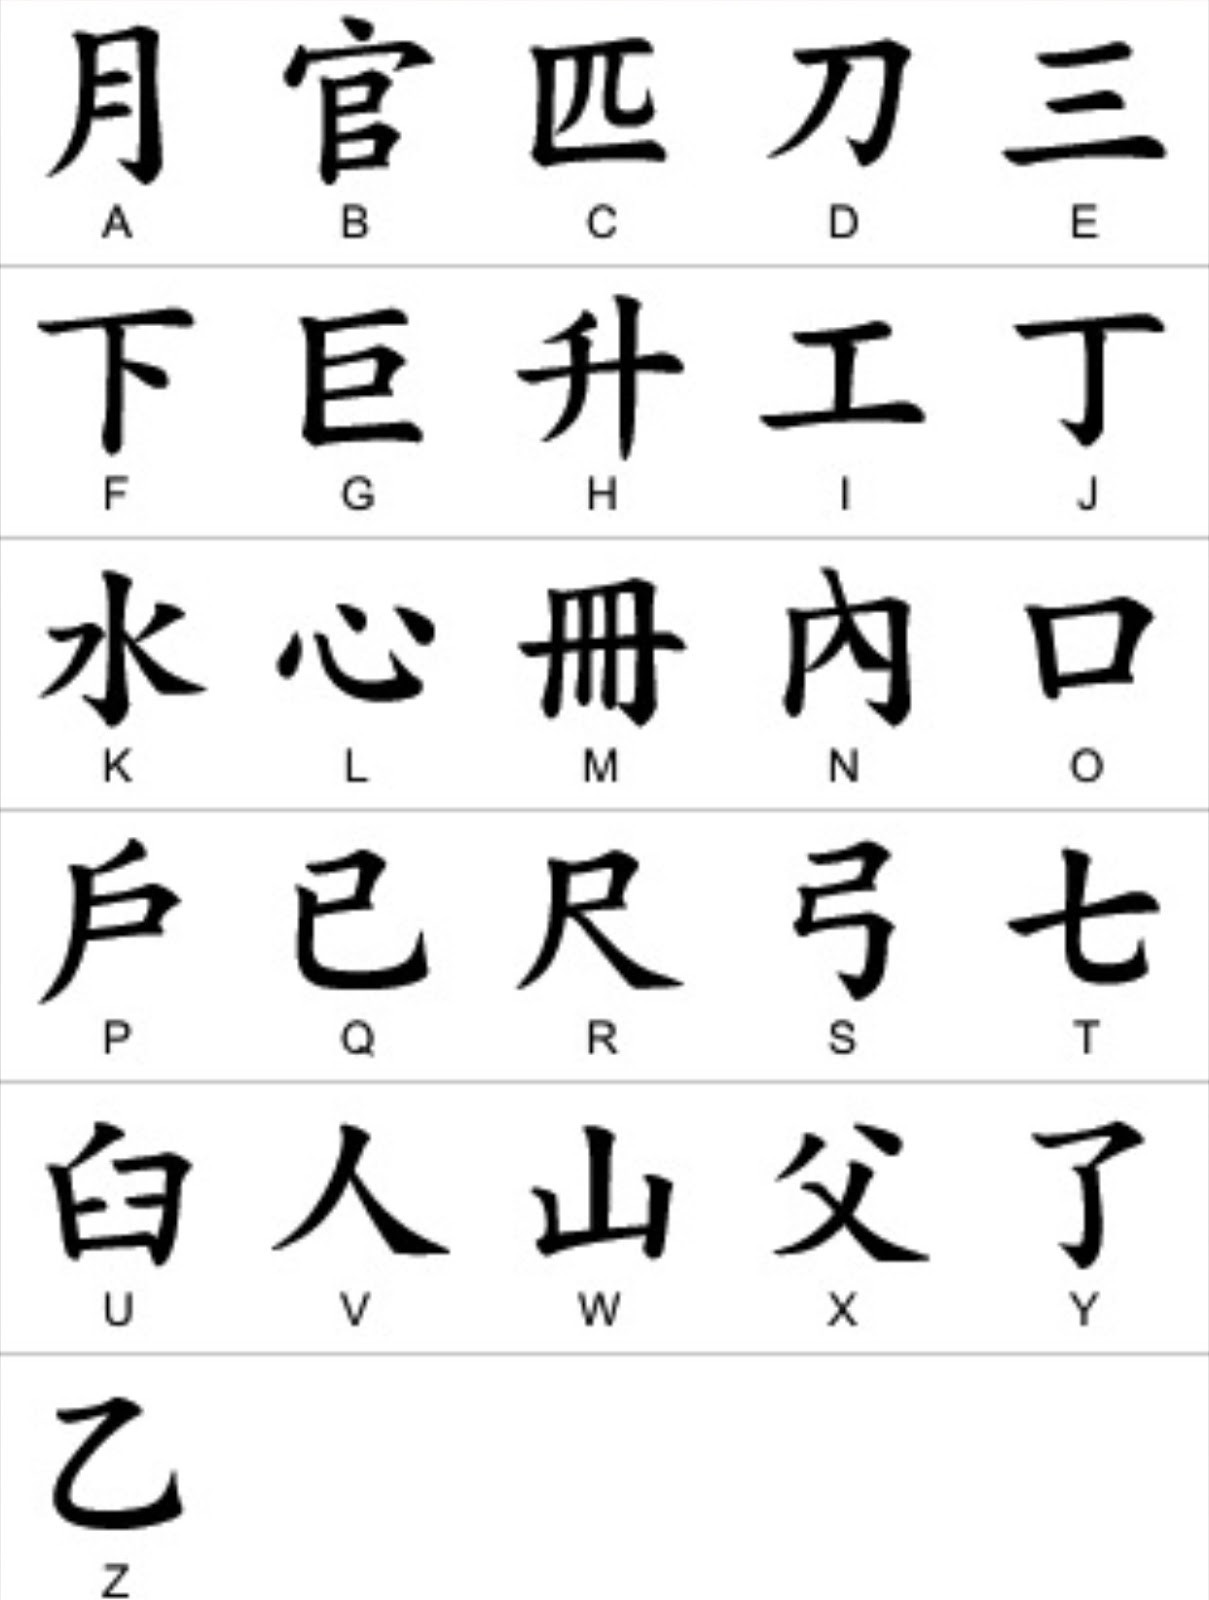 Free Printable Chinese Alphabet